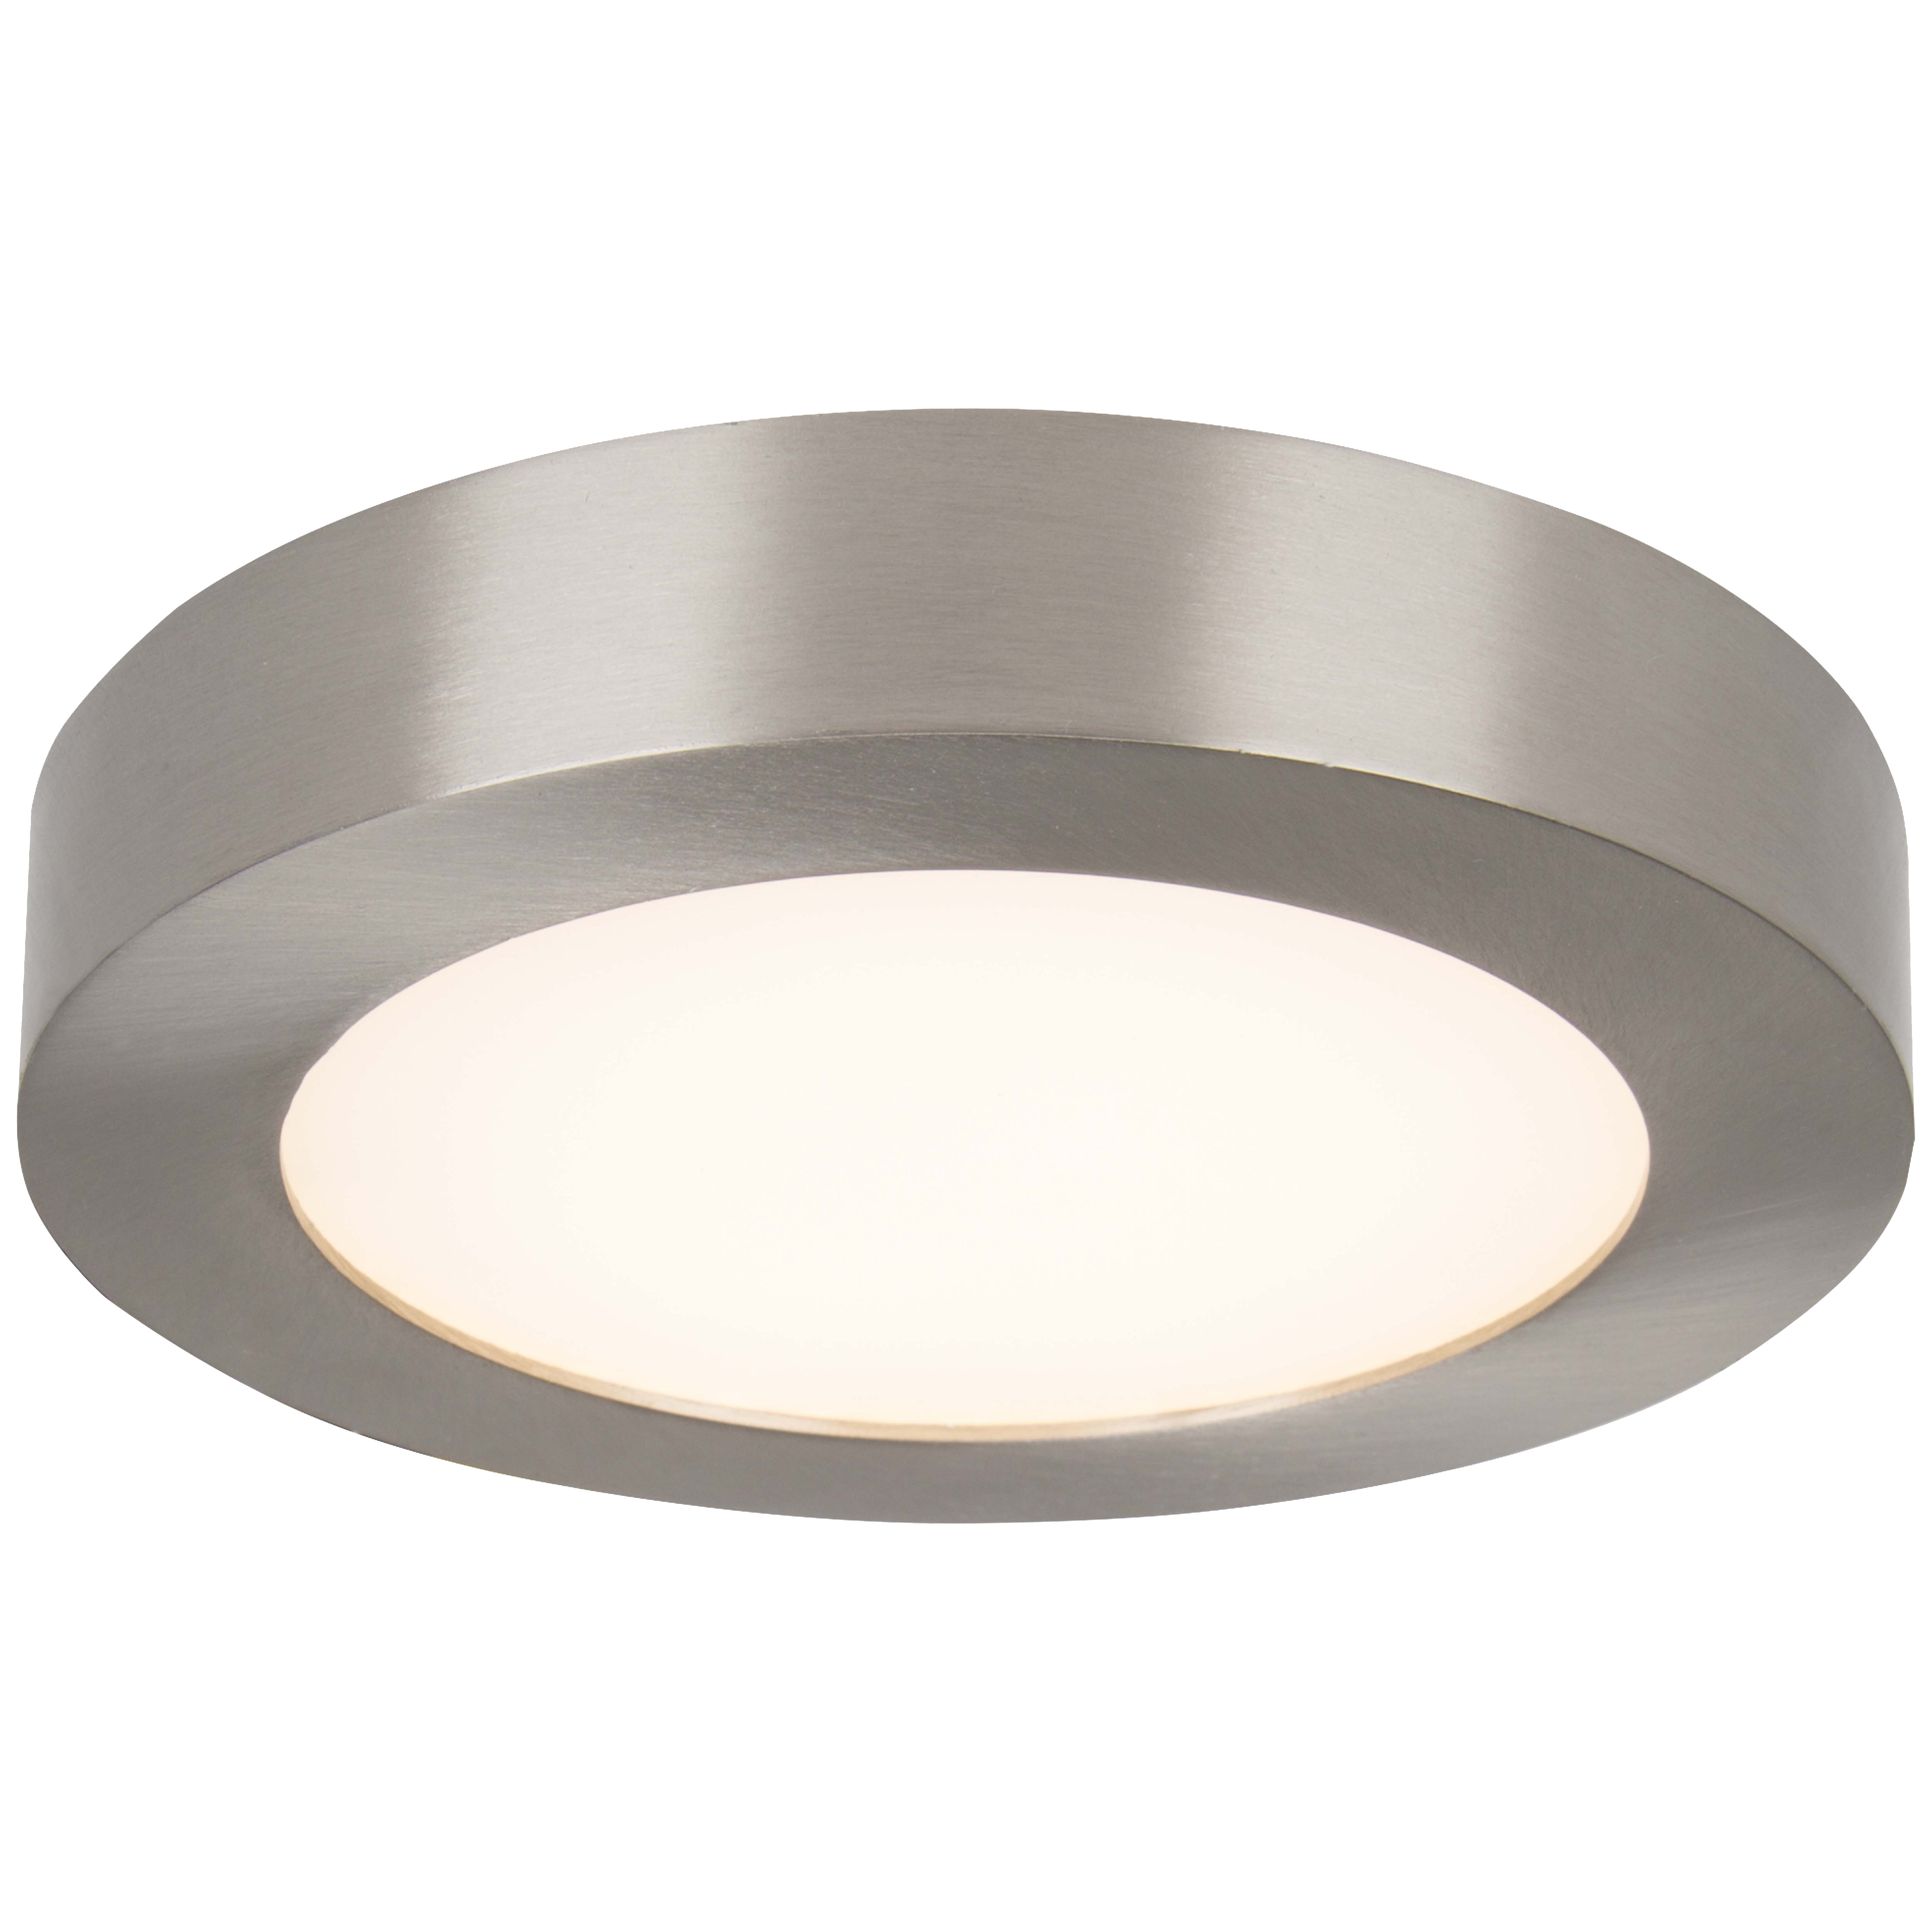 CL040A BN Ceiling Light Fixture, 0.08 A, 120 V, 10 W, LED Lamp, 550 Lumens, 3000 K Color Temp